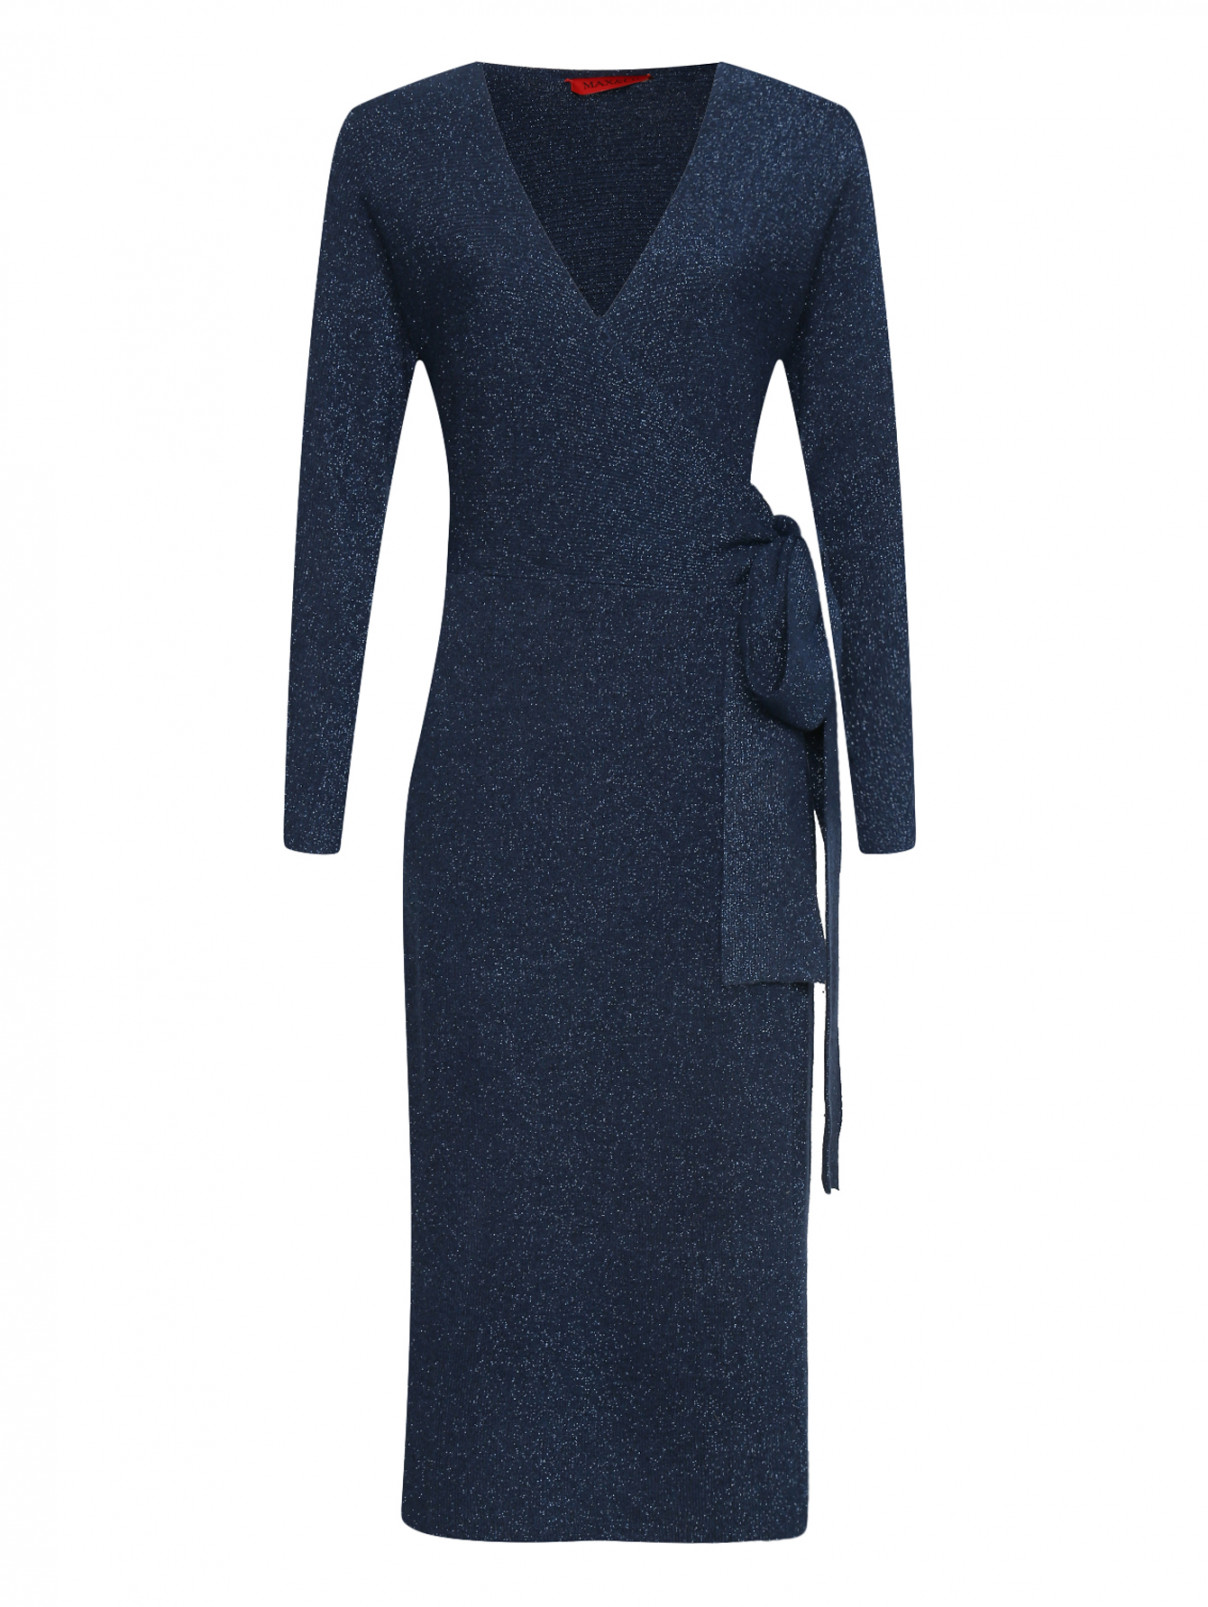 Трикотажное платье-миди на запах Max&Co  –  Общий вид  – Цвет:  Синий